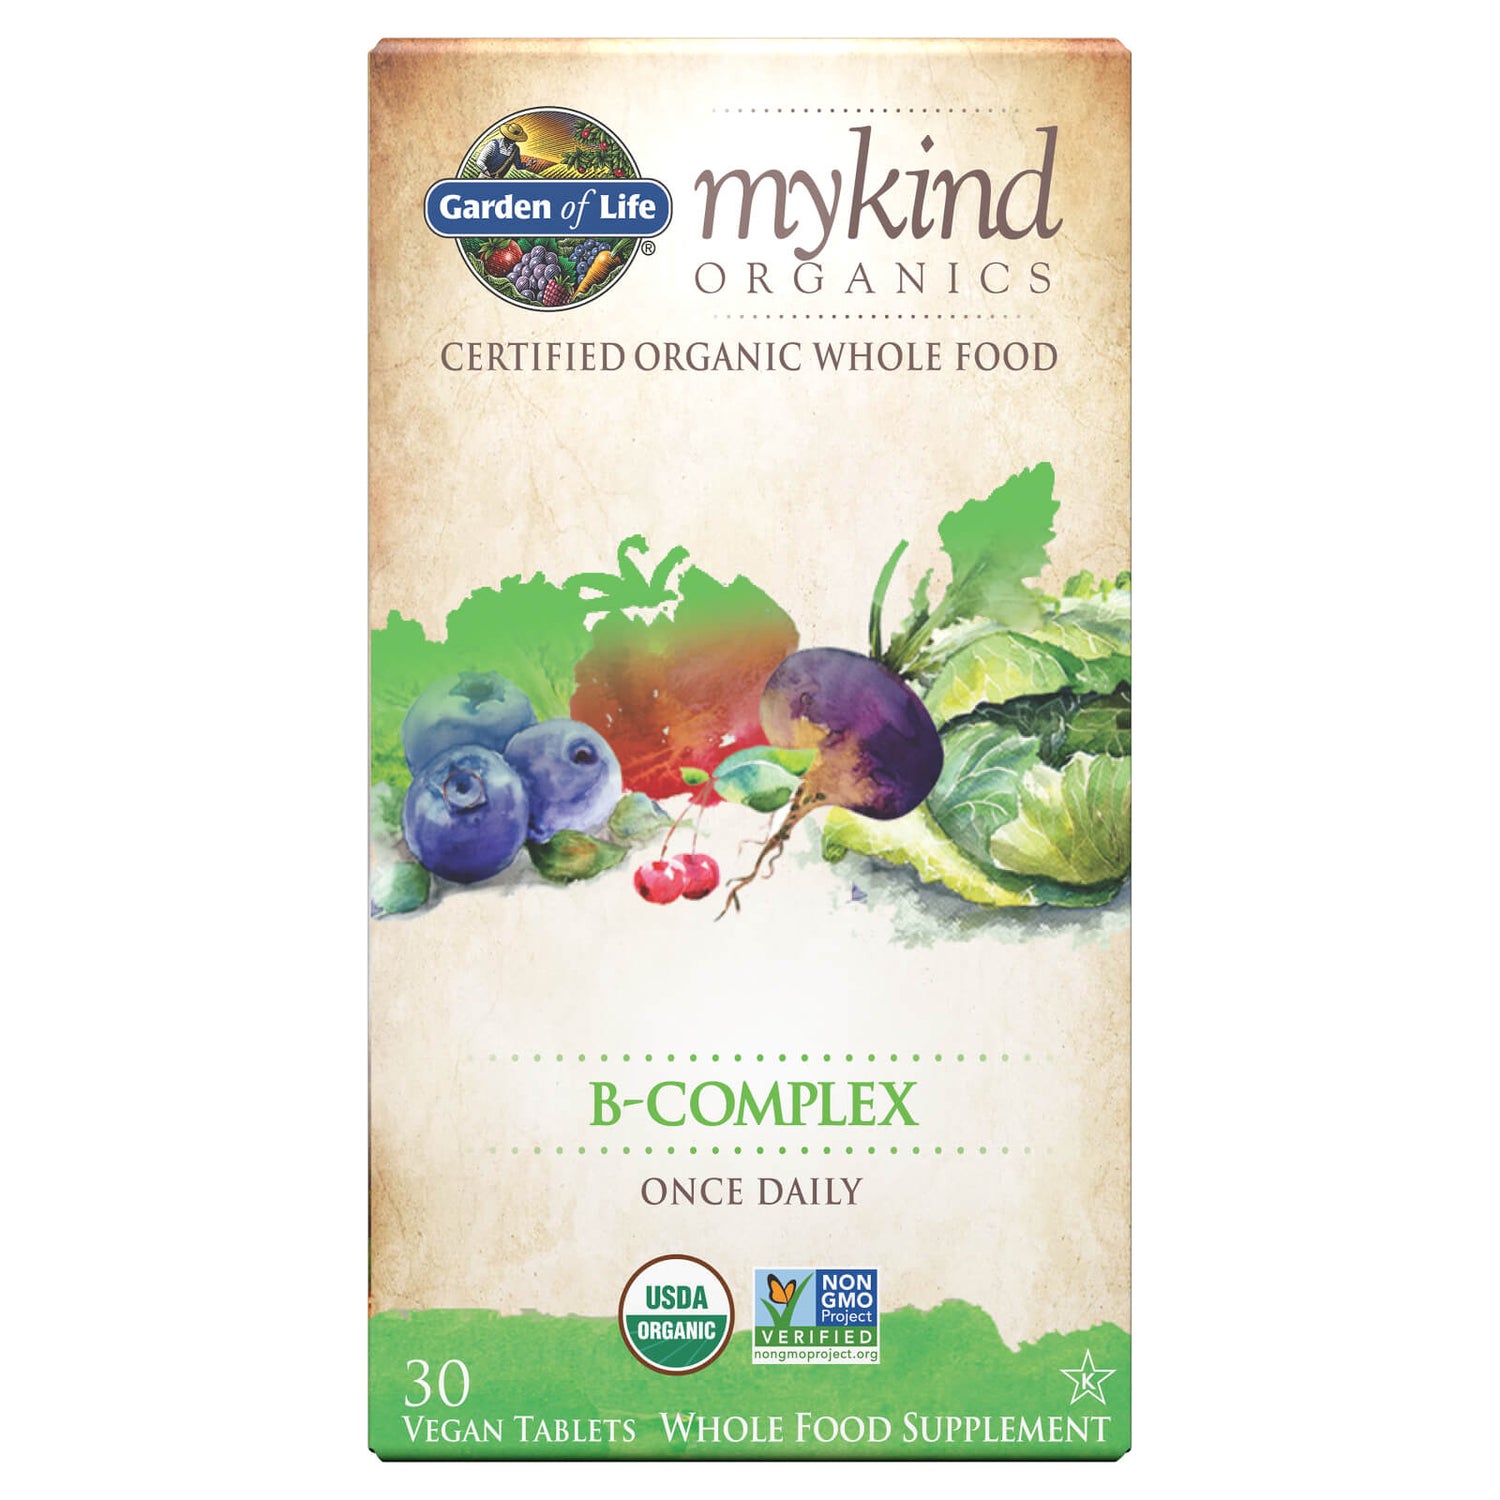 mykind Organics Complesso di vitamine B - 30 compresse